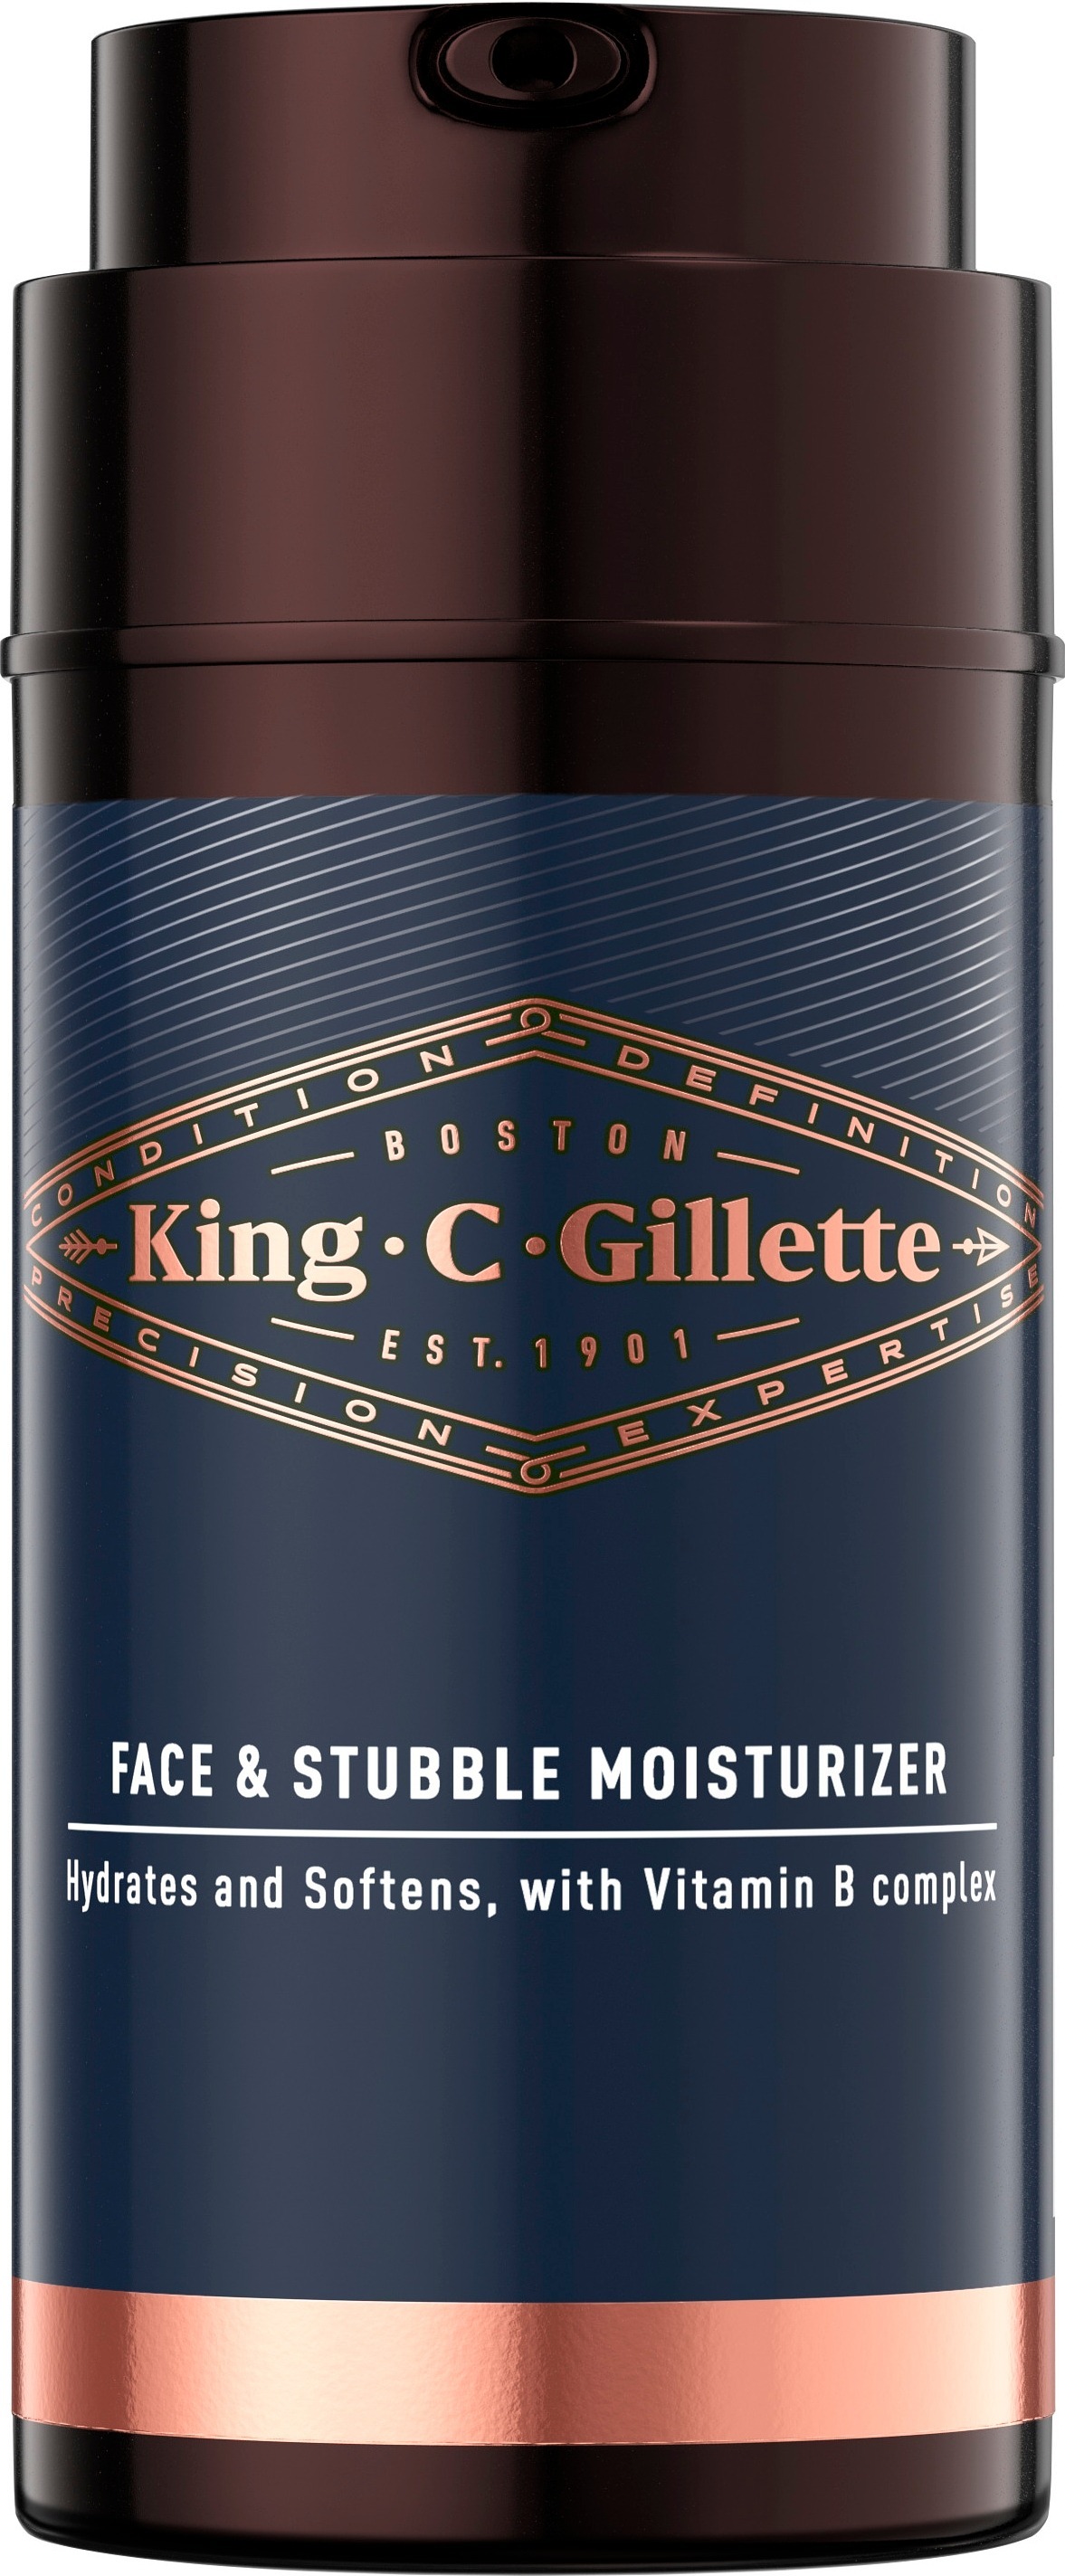 Gillette King C Gillette Face & Stubble Moisturizer 100 ml